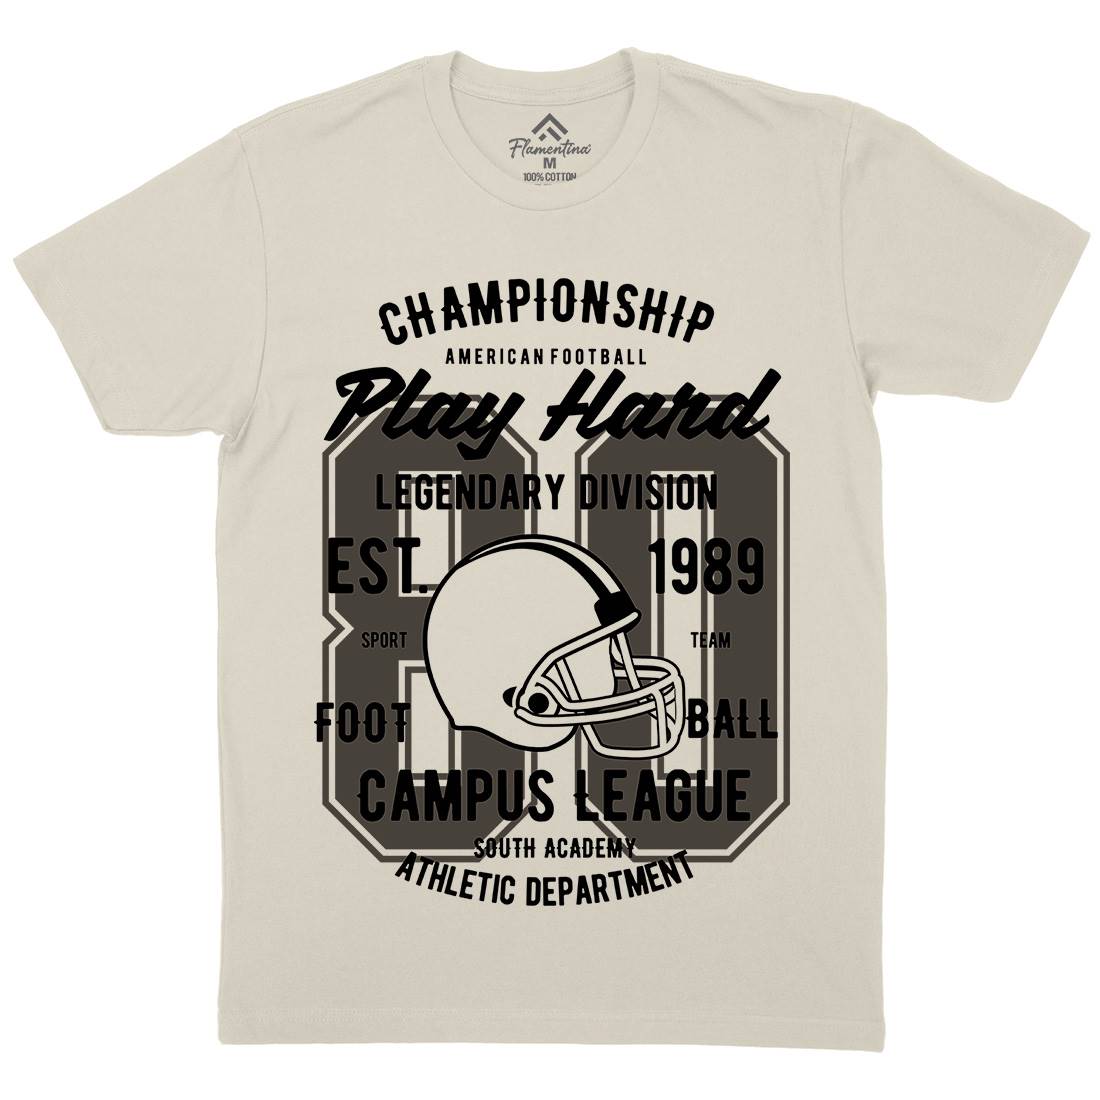 Play Hard Football Mens Organic Crew Neck T-Shirt Sport B435